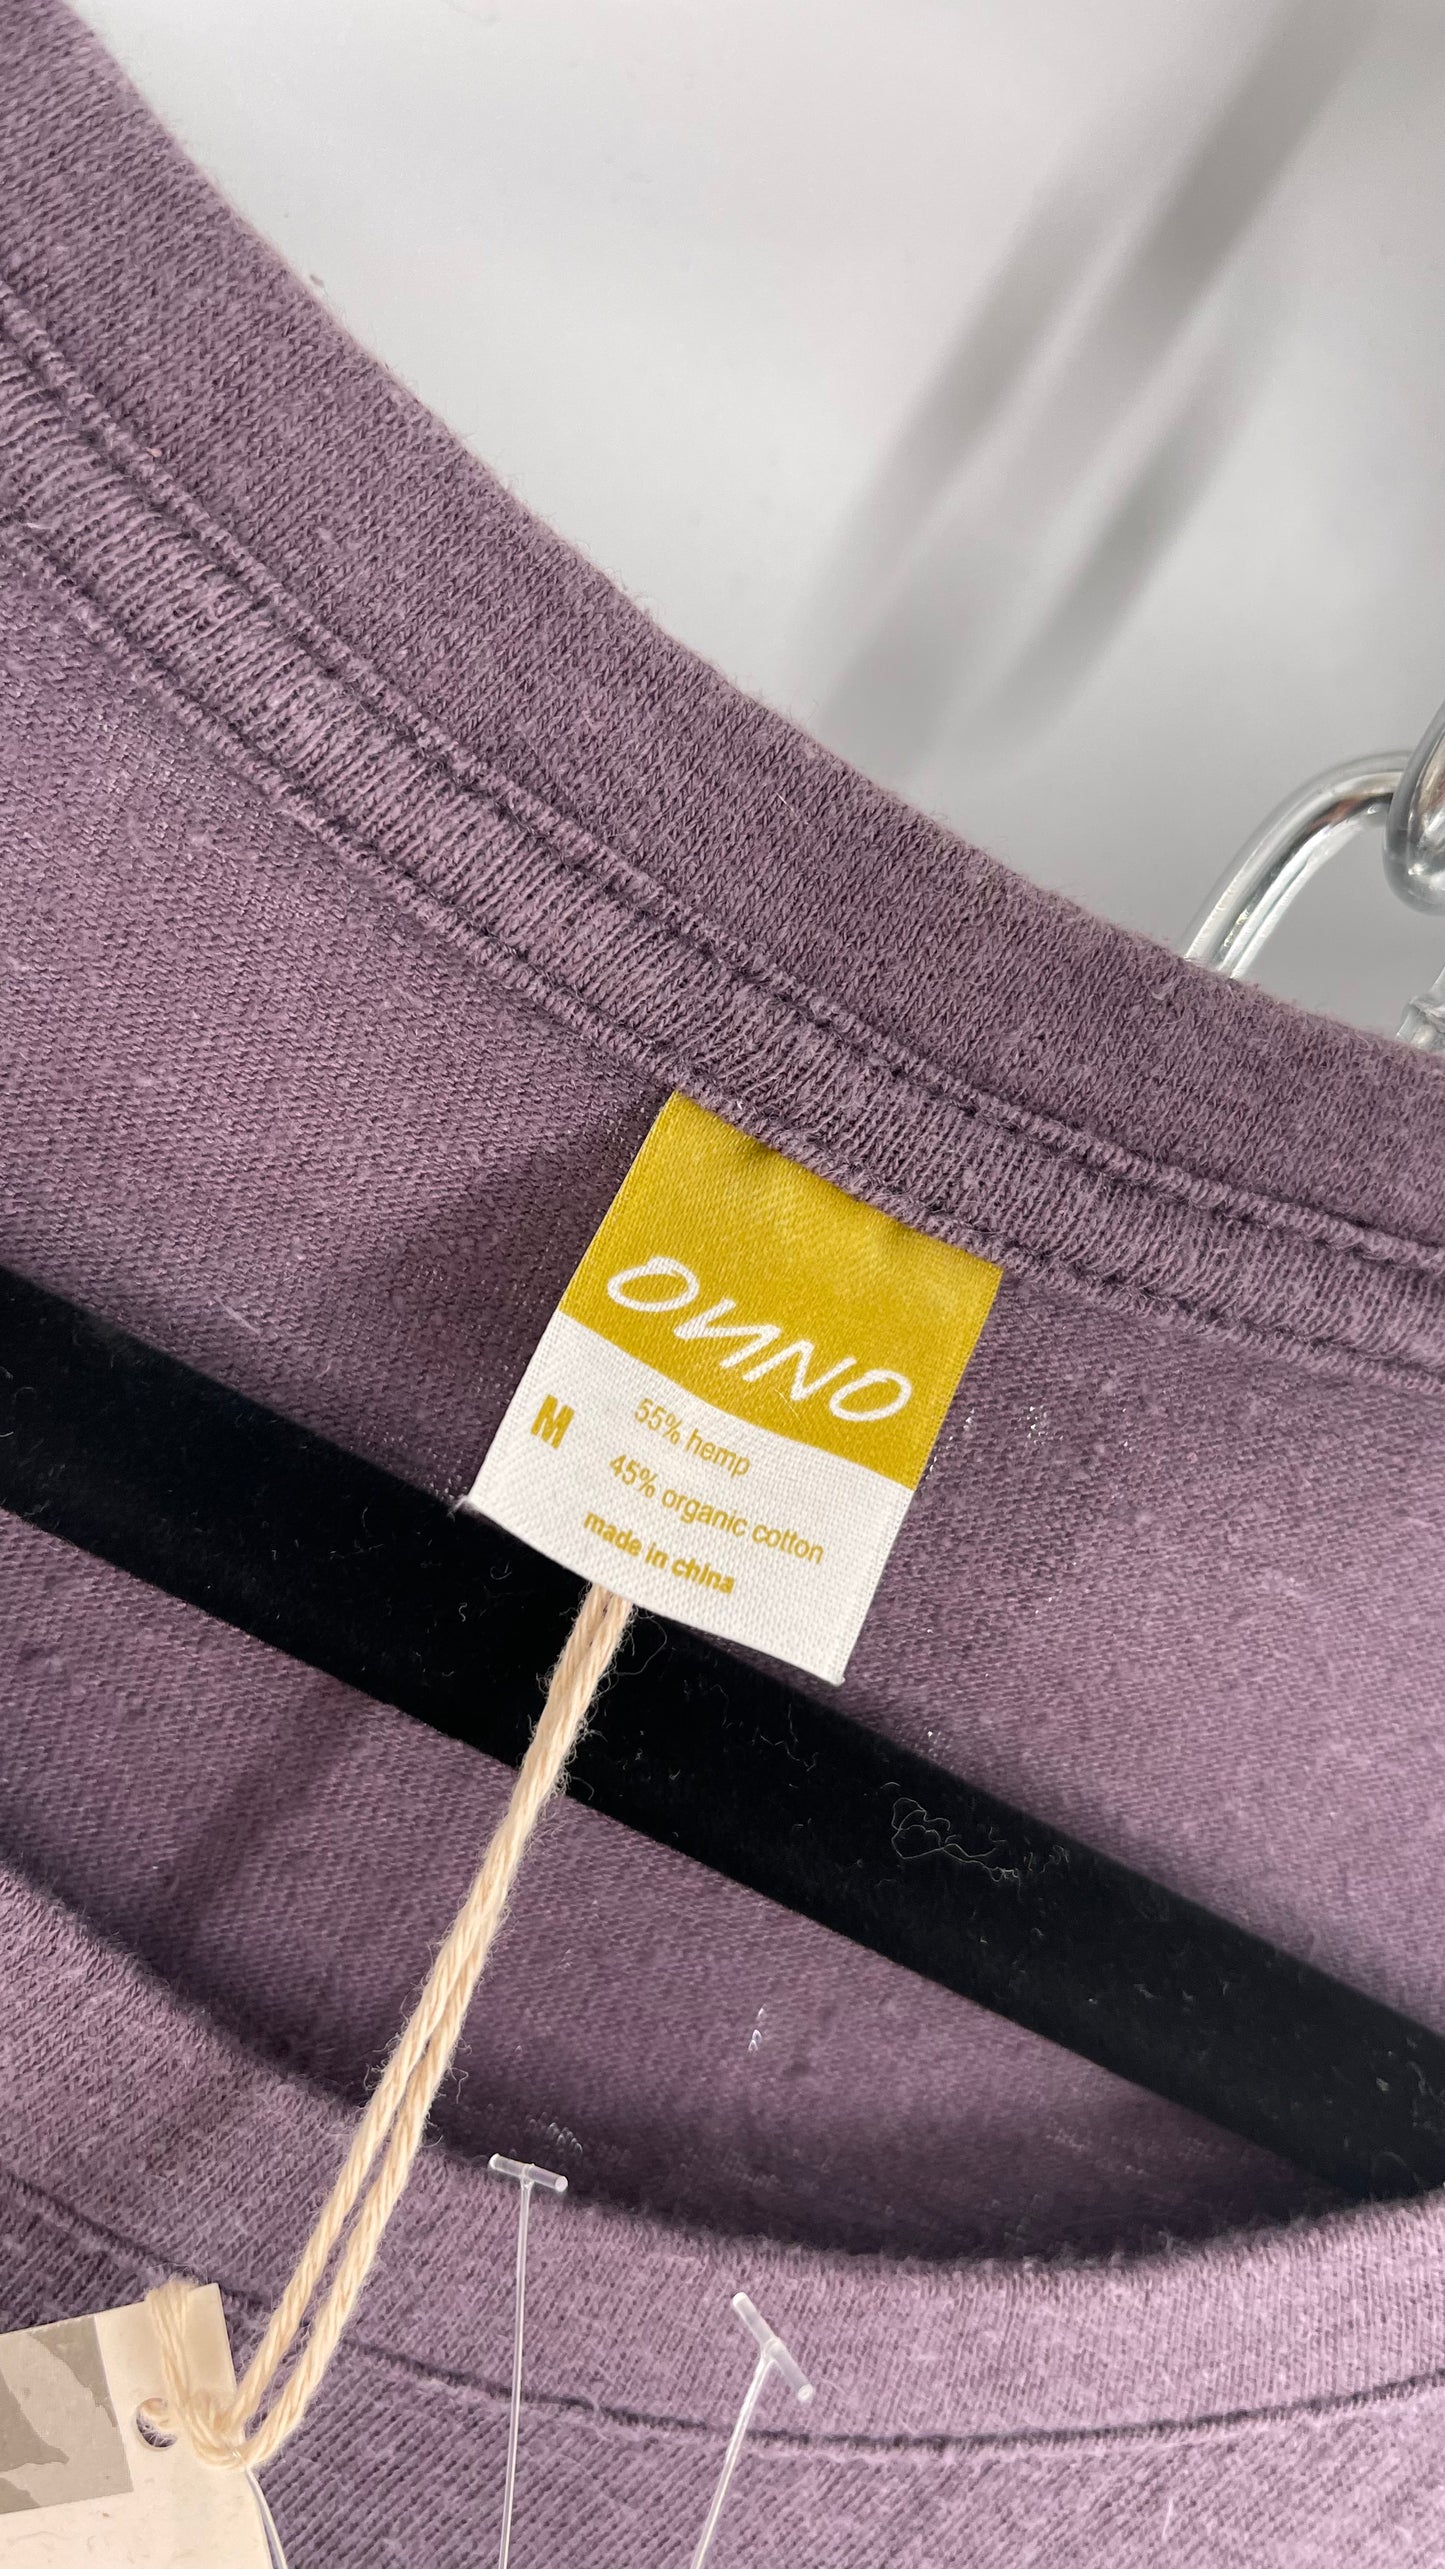 ONNO 55% Hemp 45% Organic Cotton T Shirt with Tags (Medium)